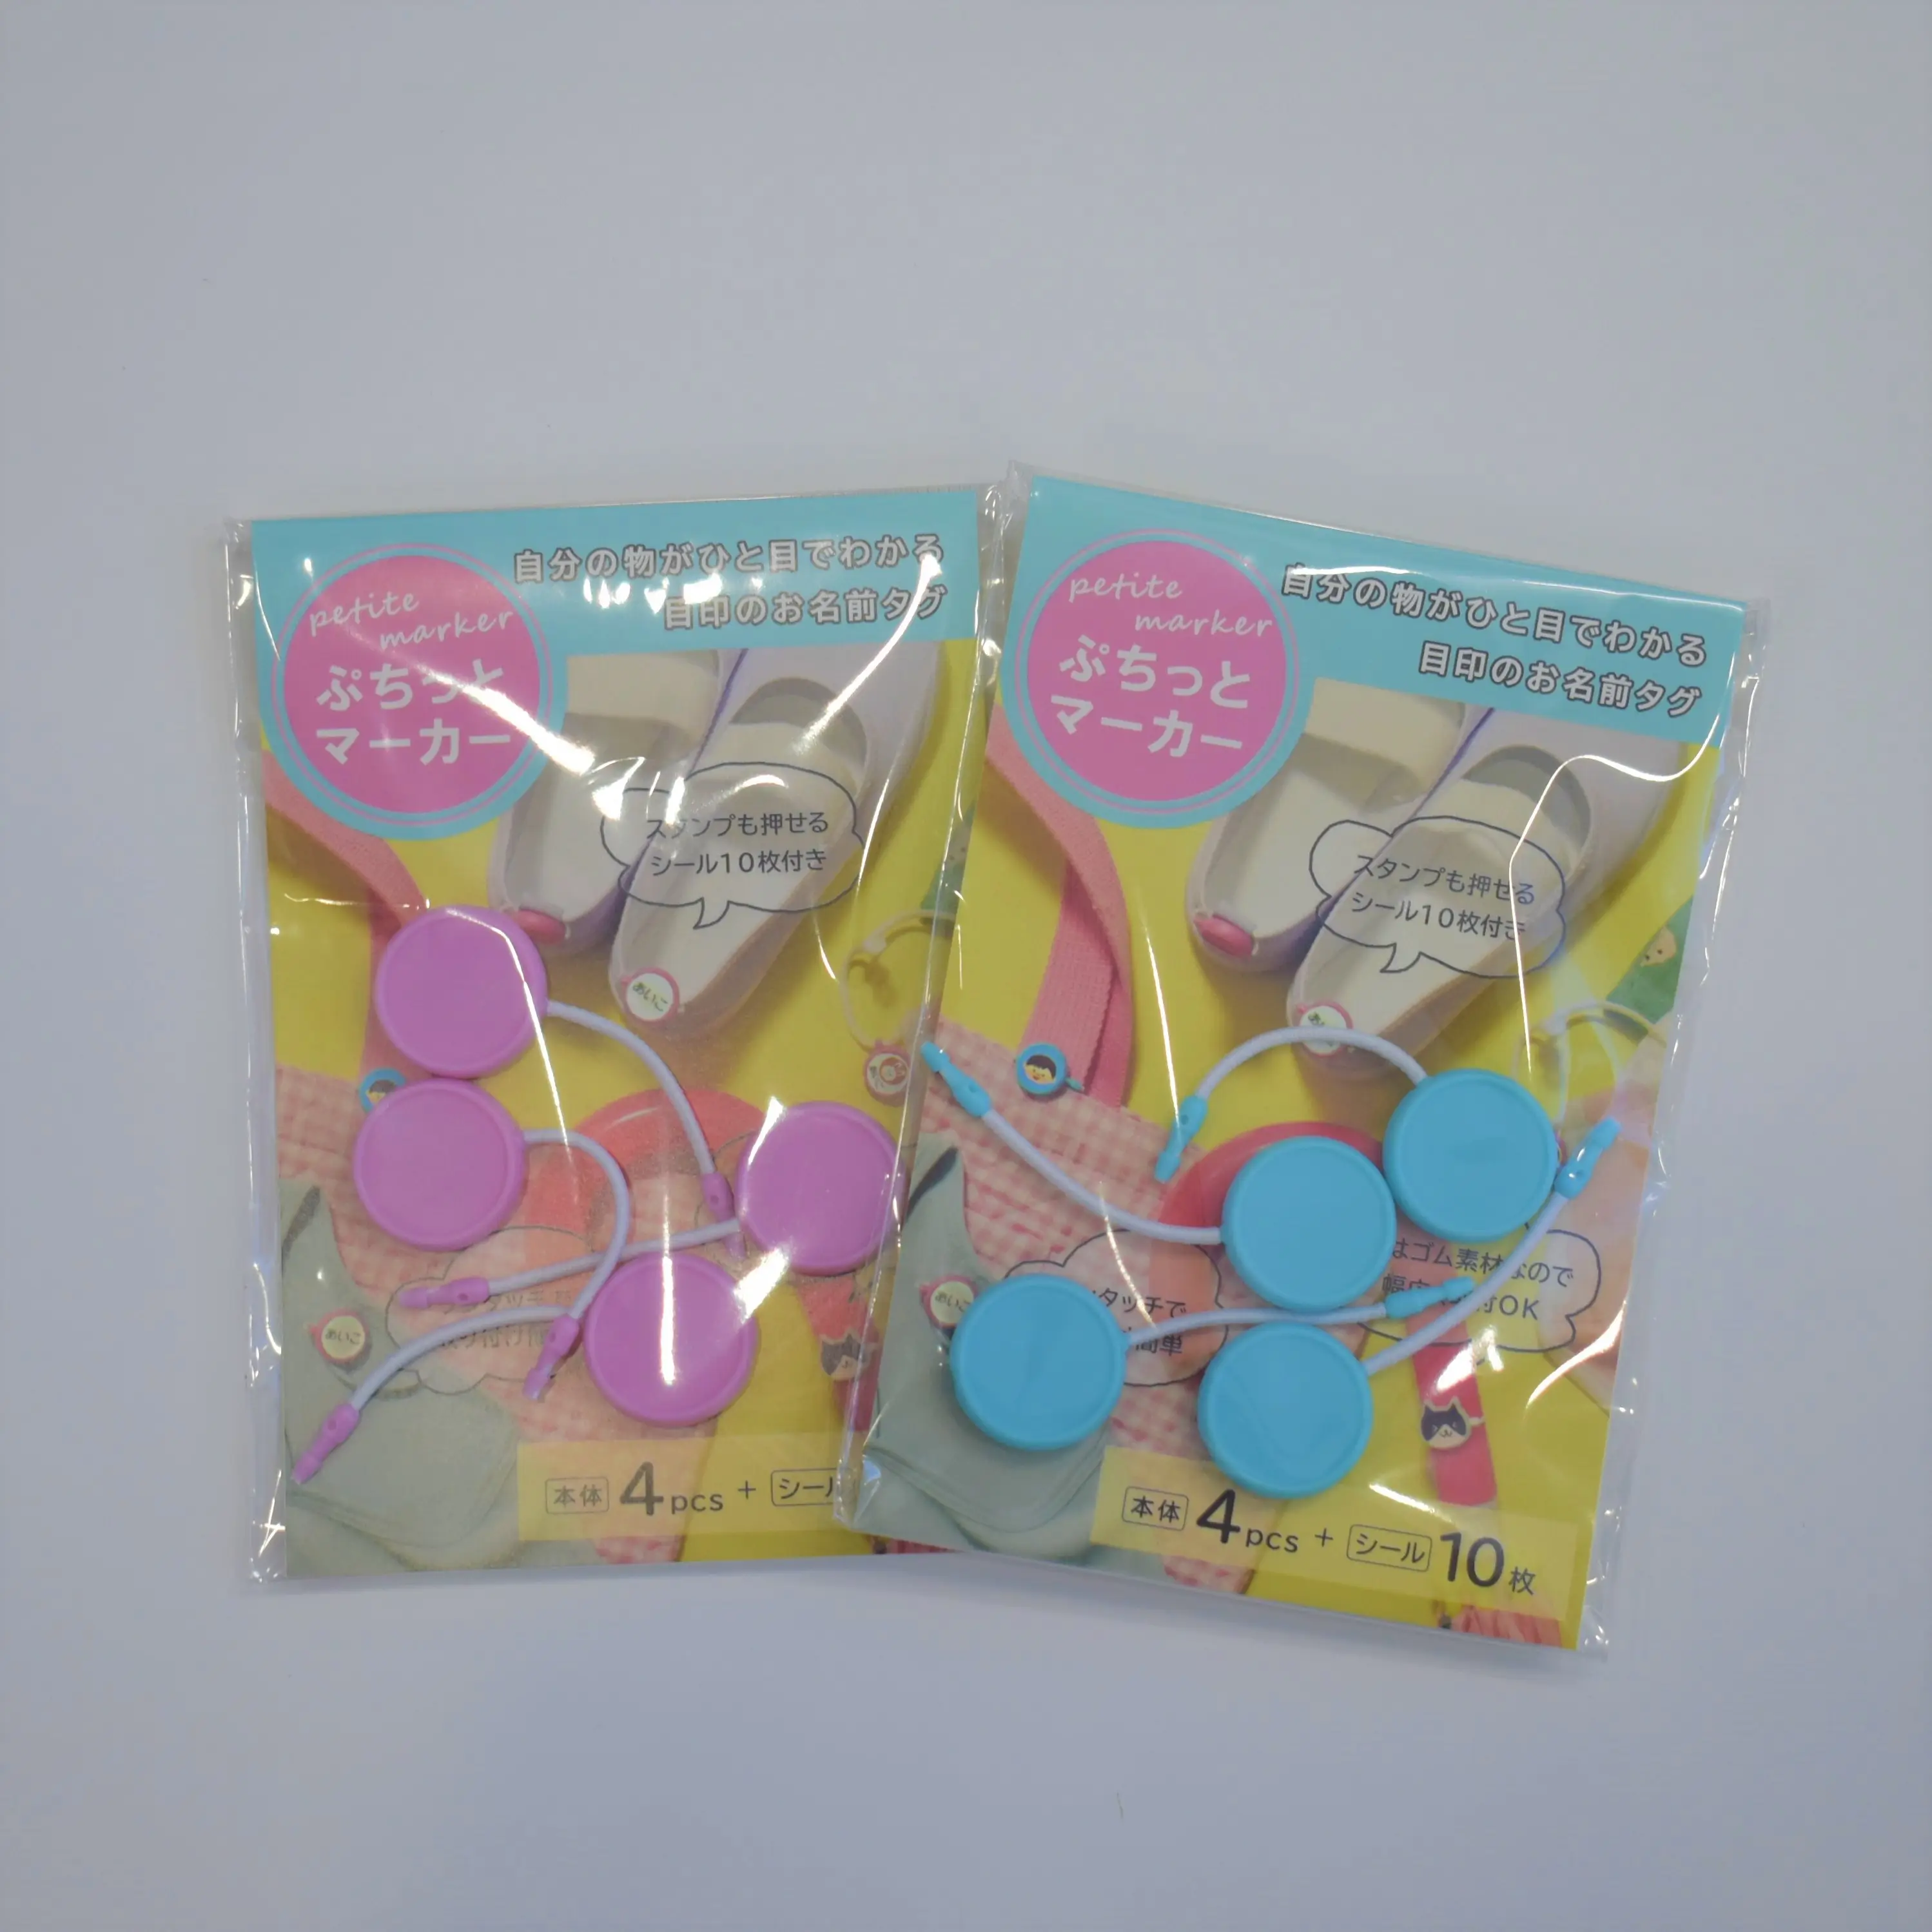 Mini Marker made in Japan marking shoes umbrella hat bag purse stuff shirt dress garment accessories pink blue color souvenir